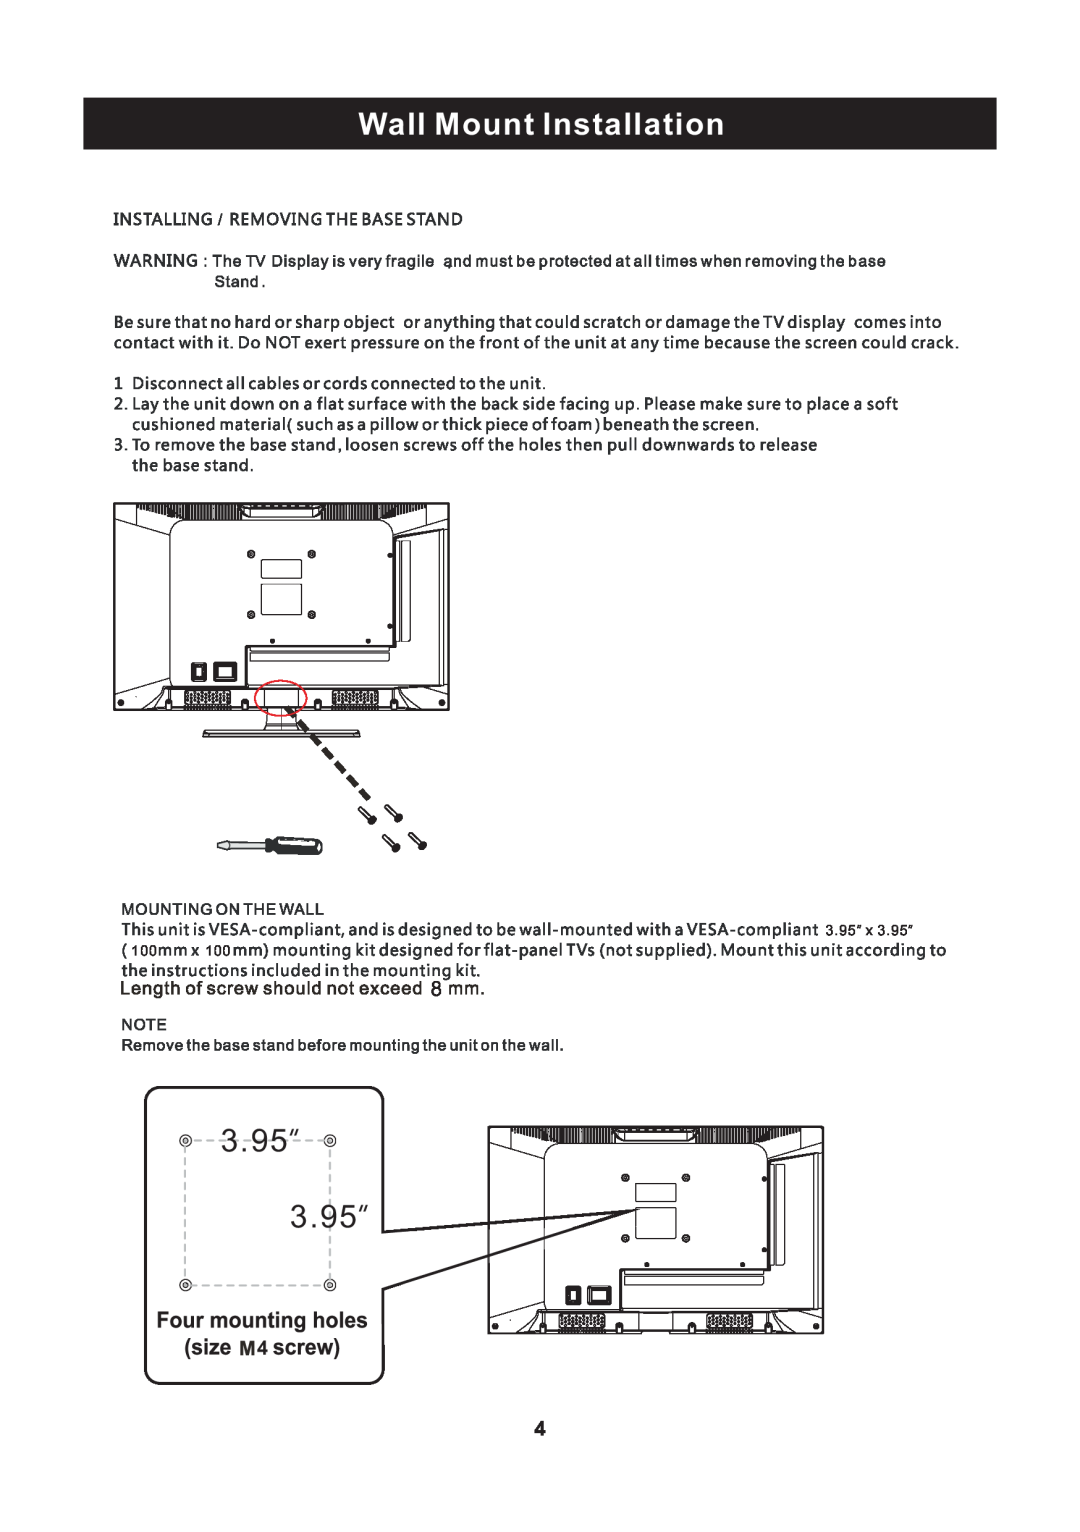 ProScan RLED2445A-B instruction manual Wall Mount Installation, 3.95” 3.95”, 3.95” x 3.95” 